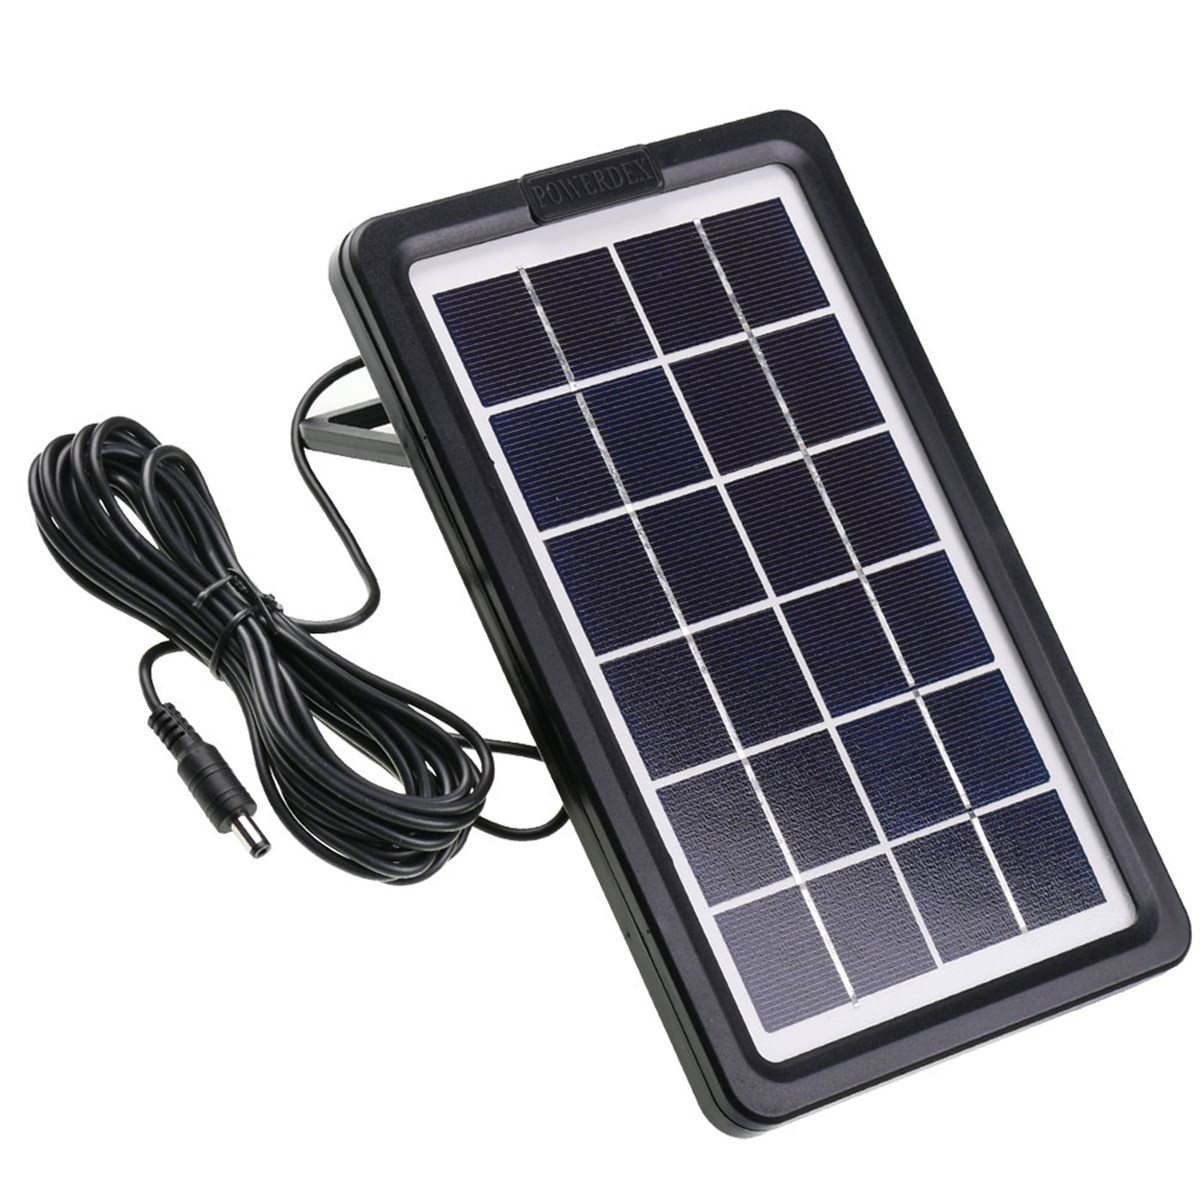 Powerdex PD-6800 FM USB Bluetooth’lu Güneş Enerji Solar Aydınlatma Sistemi